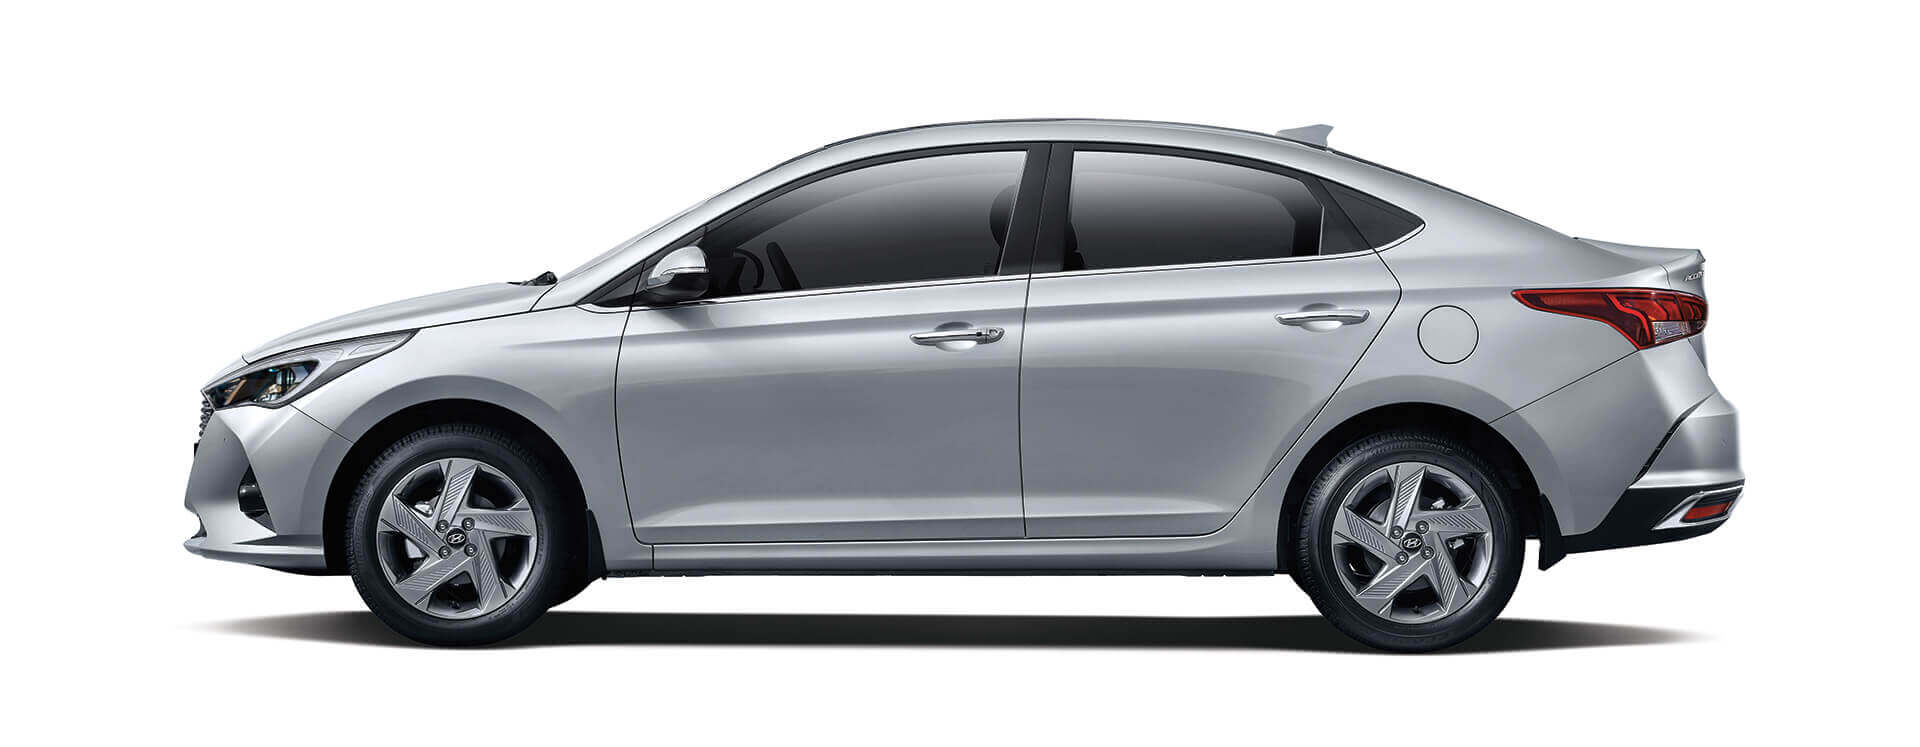 2017 Hyundai Accent Sport hatchback review  Drive